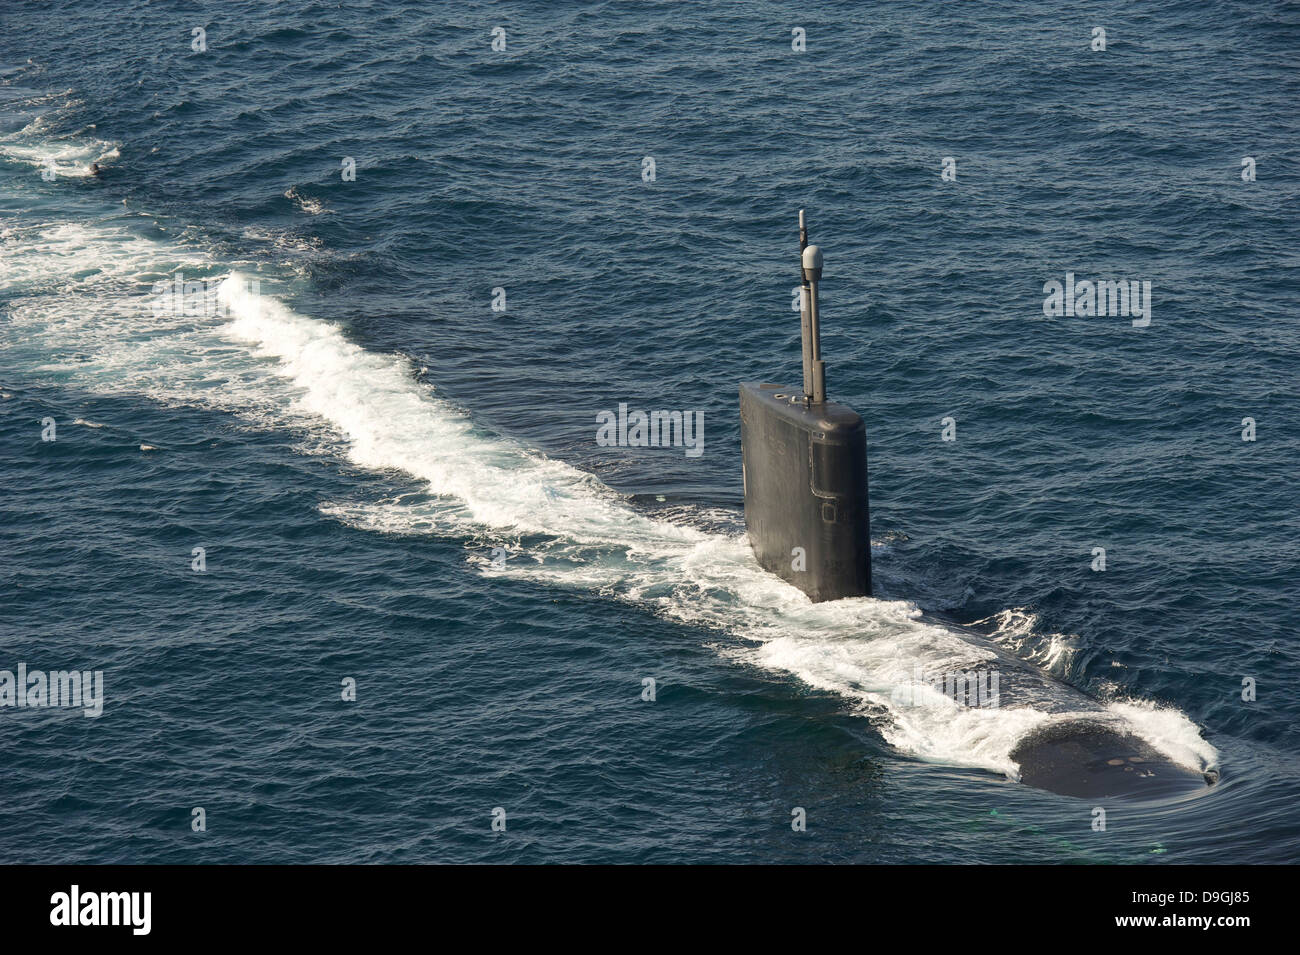 Los Angeles-class attack submarine USS Hampton. Stock Photo